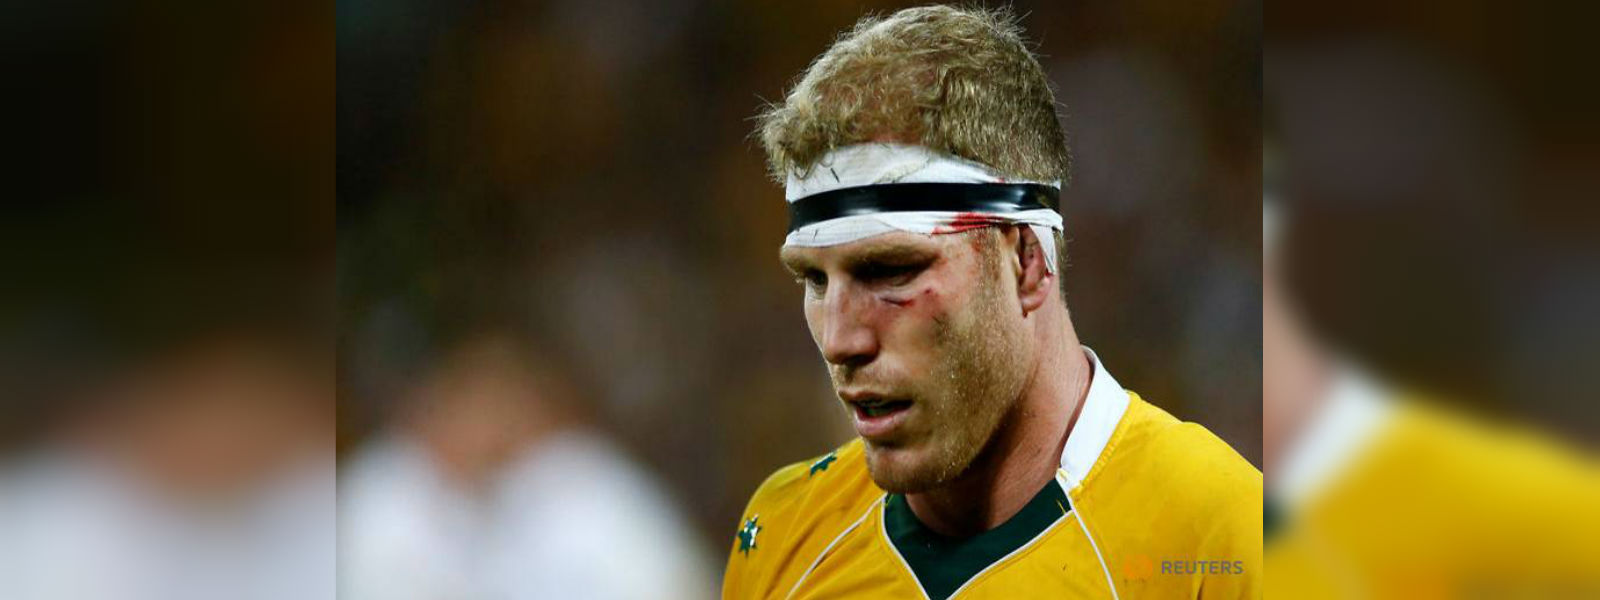 Rugby-Injured Pocock quits Brumbies,focuses WC 